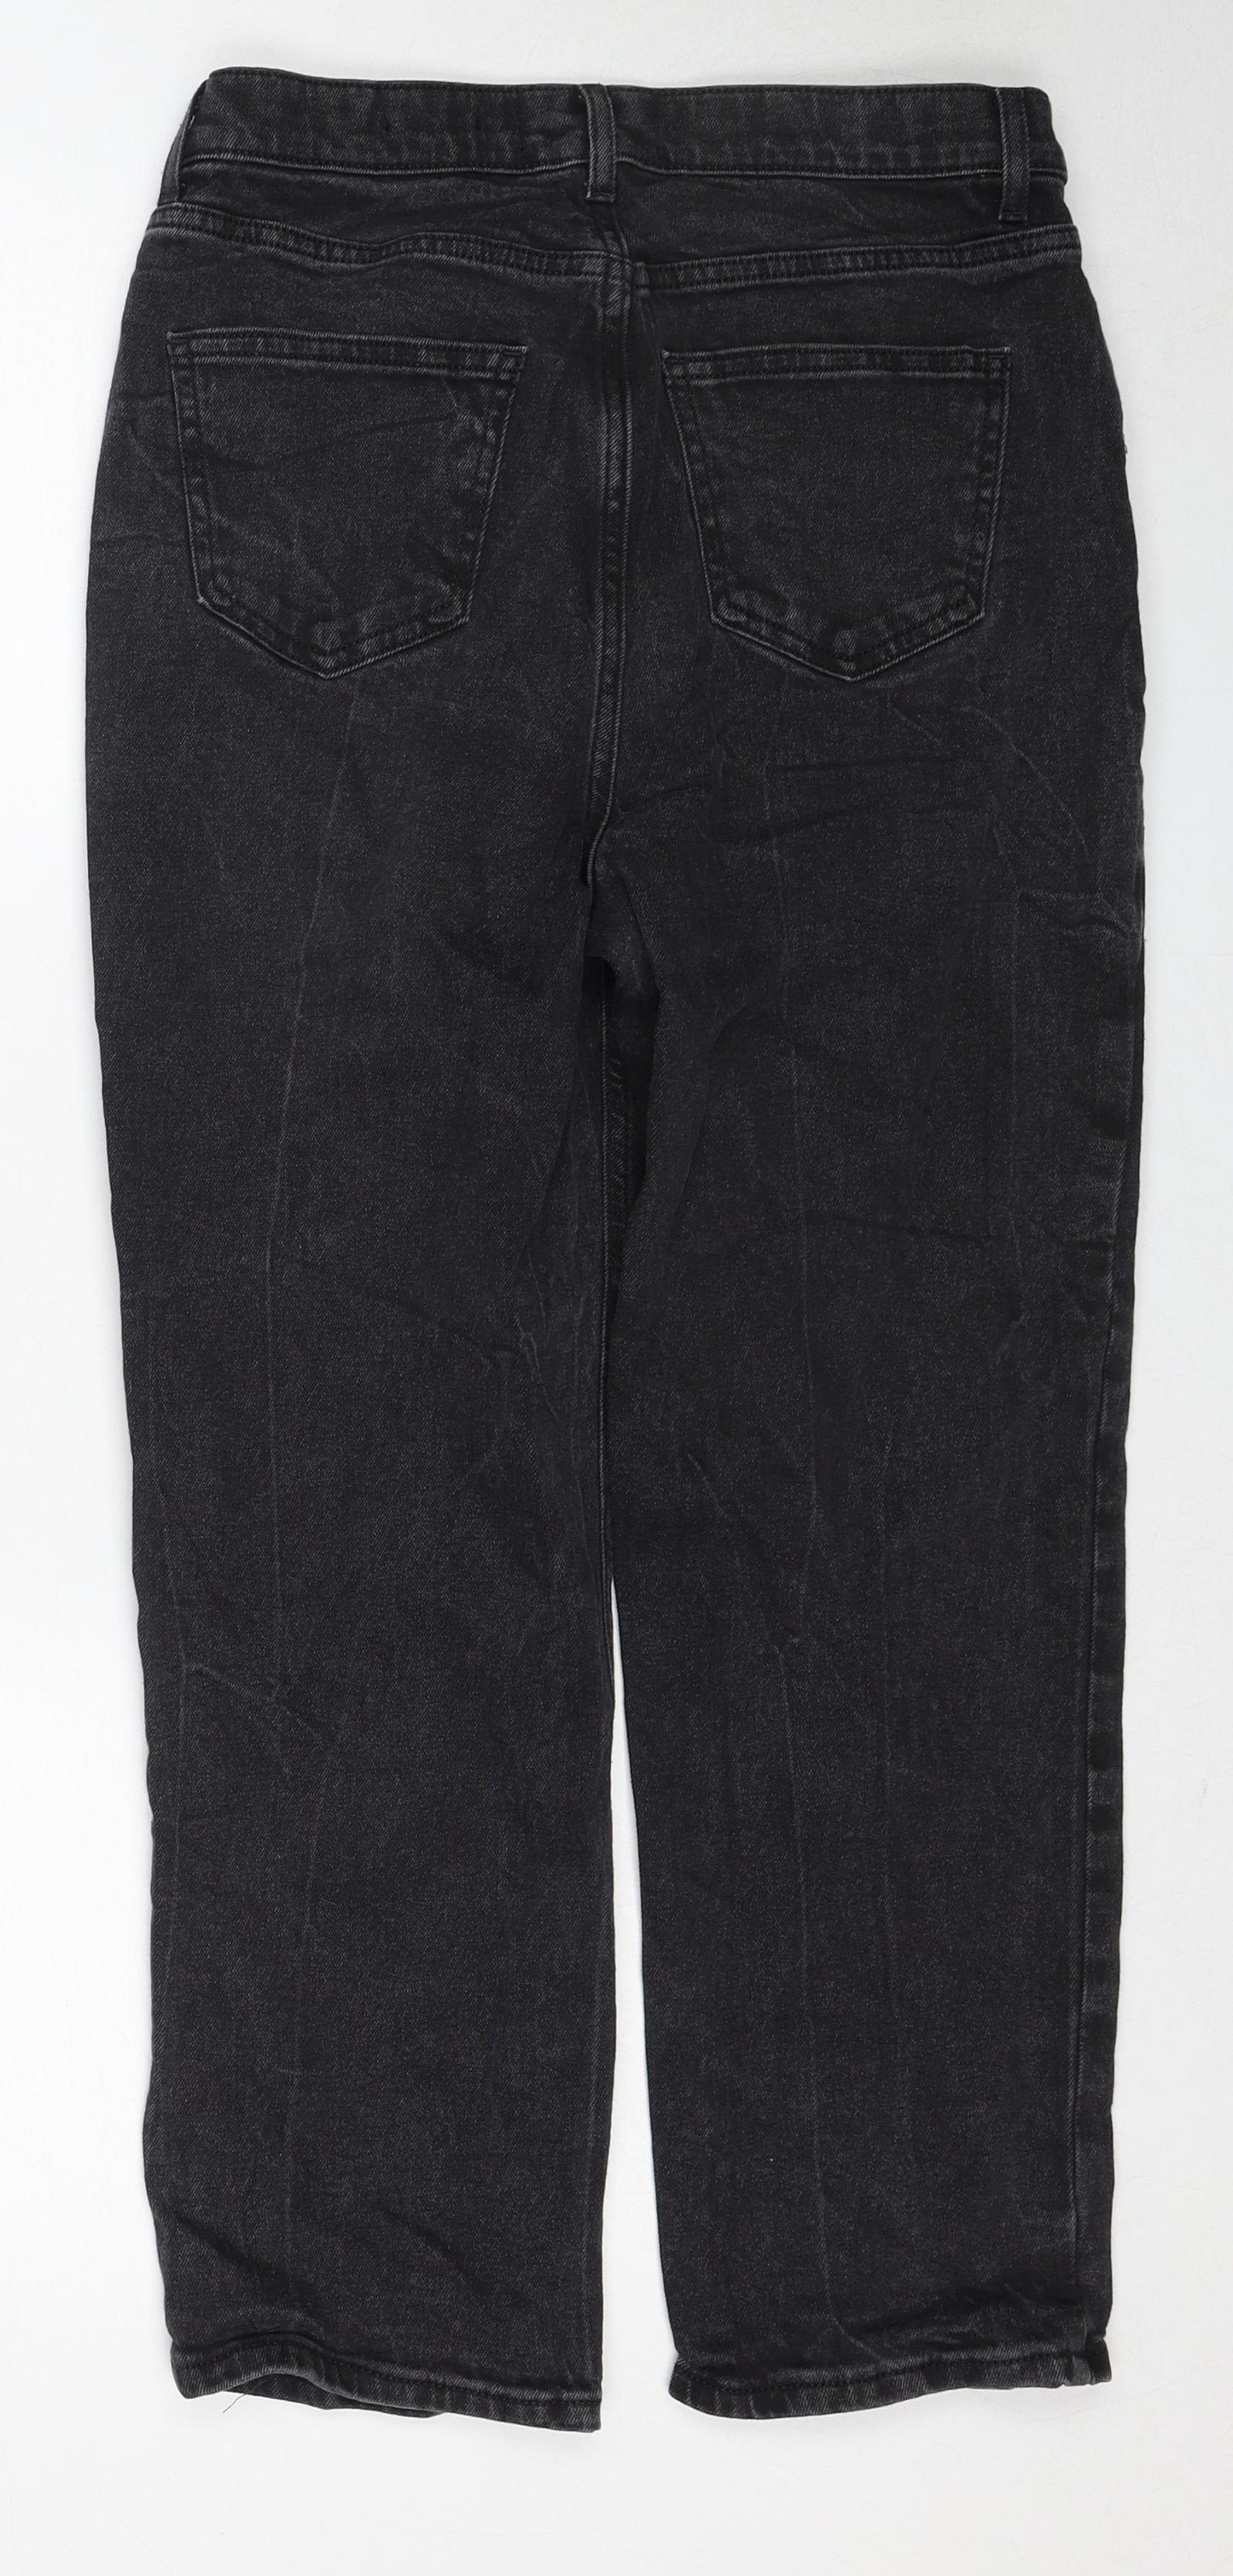 New Look Womens Black Cotton Straight Jeans Size 12 Regular Zip